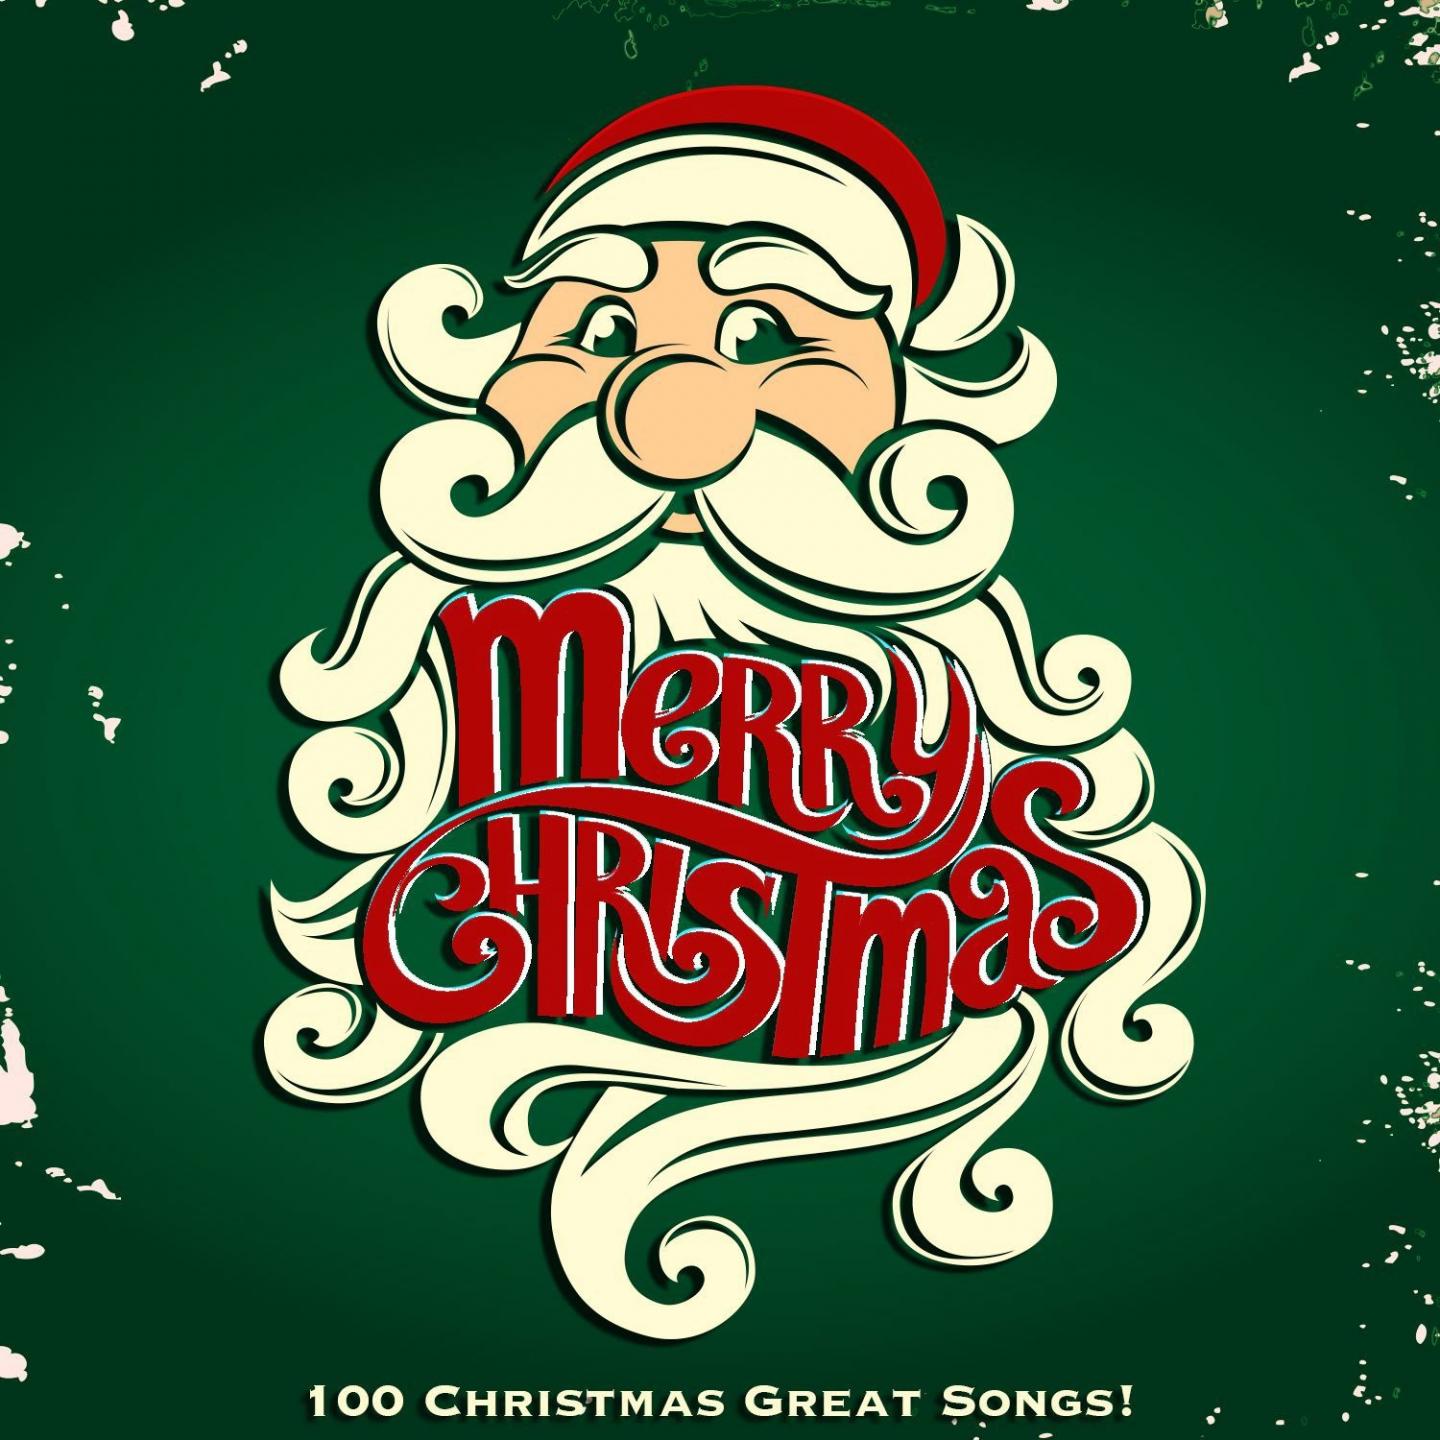 Merry Christmas - 100 Christmas Great Songs!